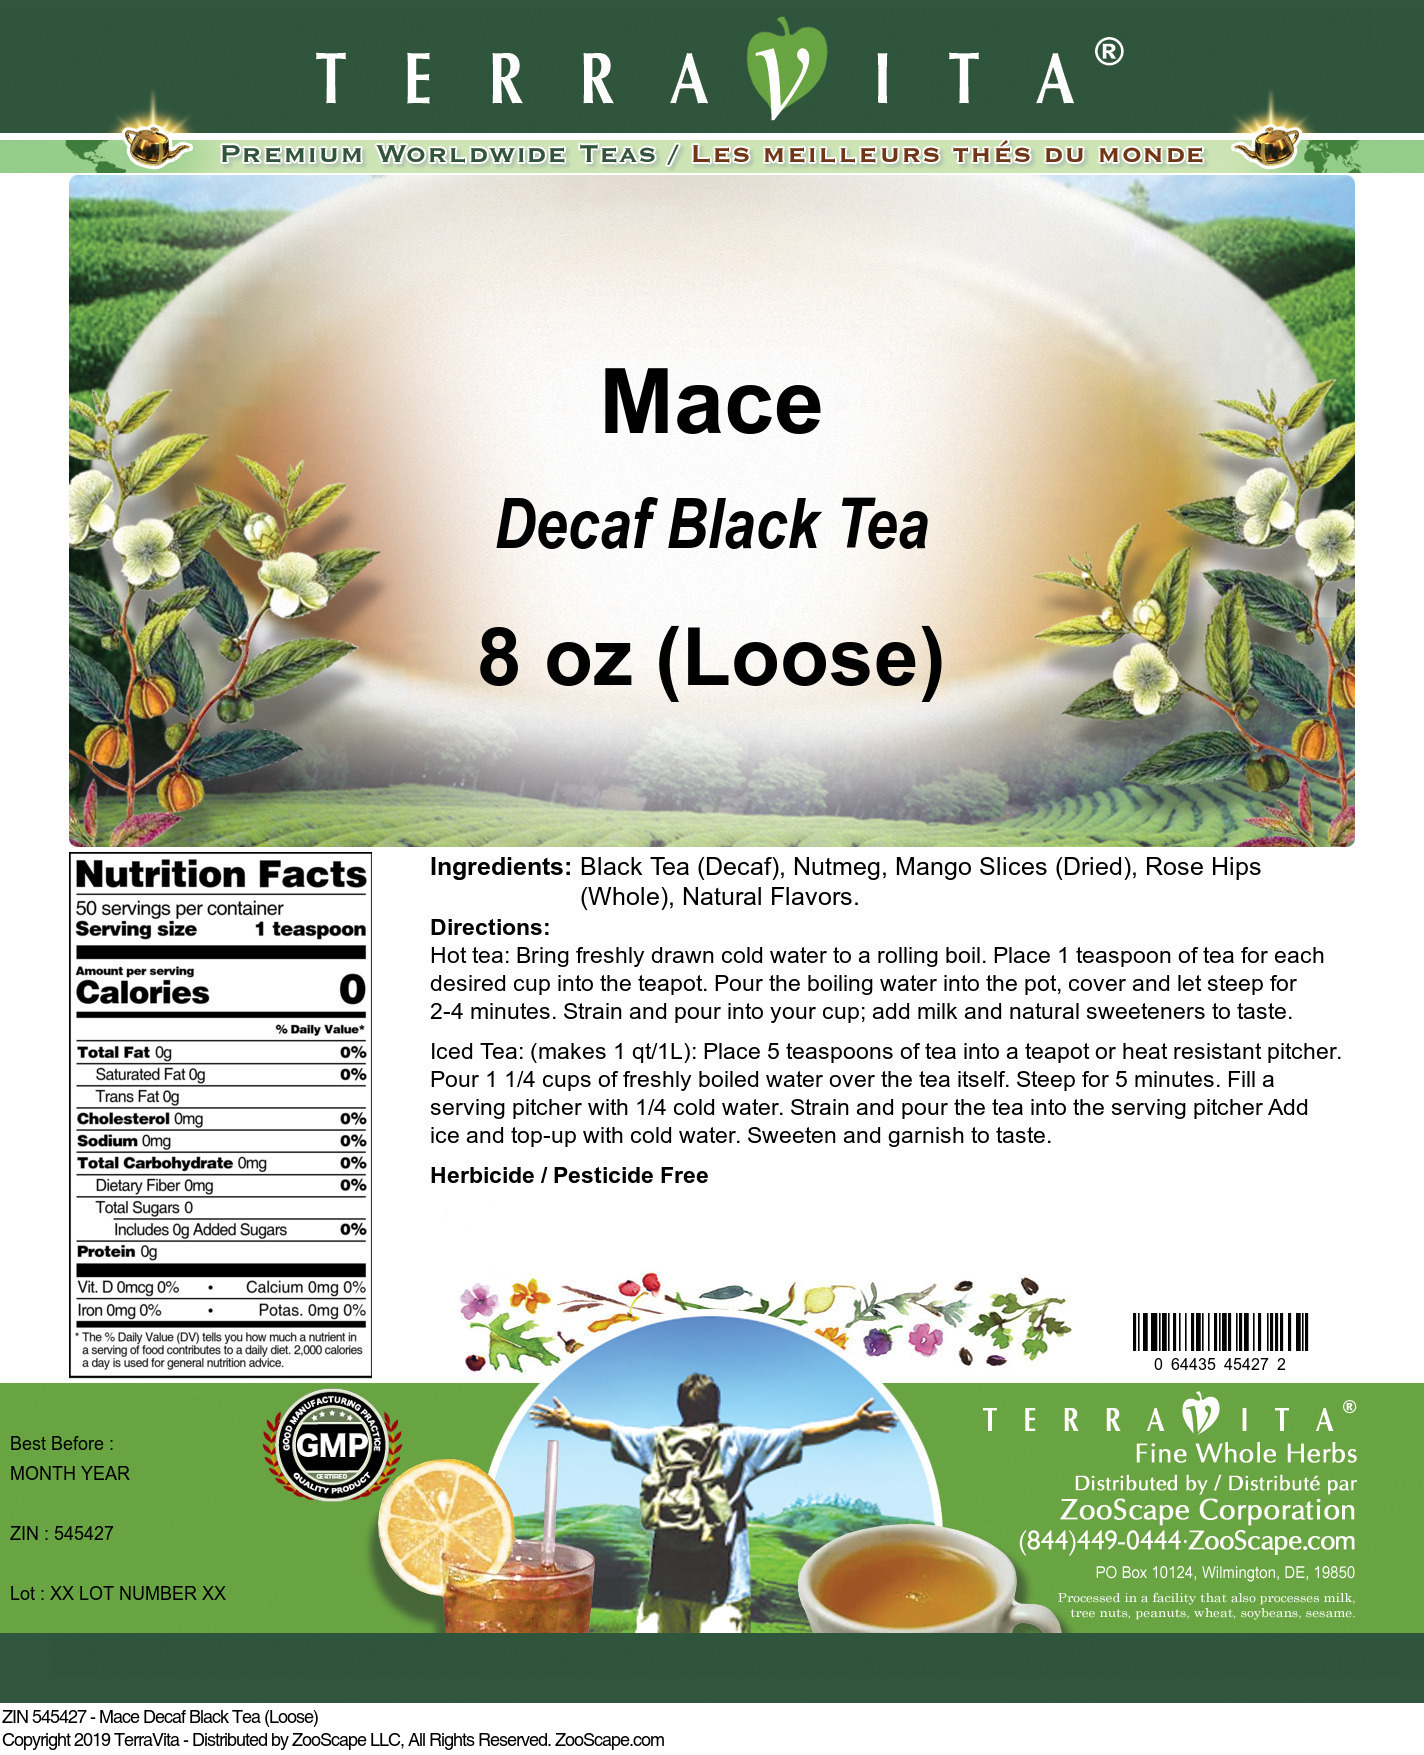 Mace Decaf Black Tea (Loose) - Label